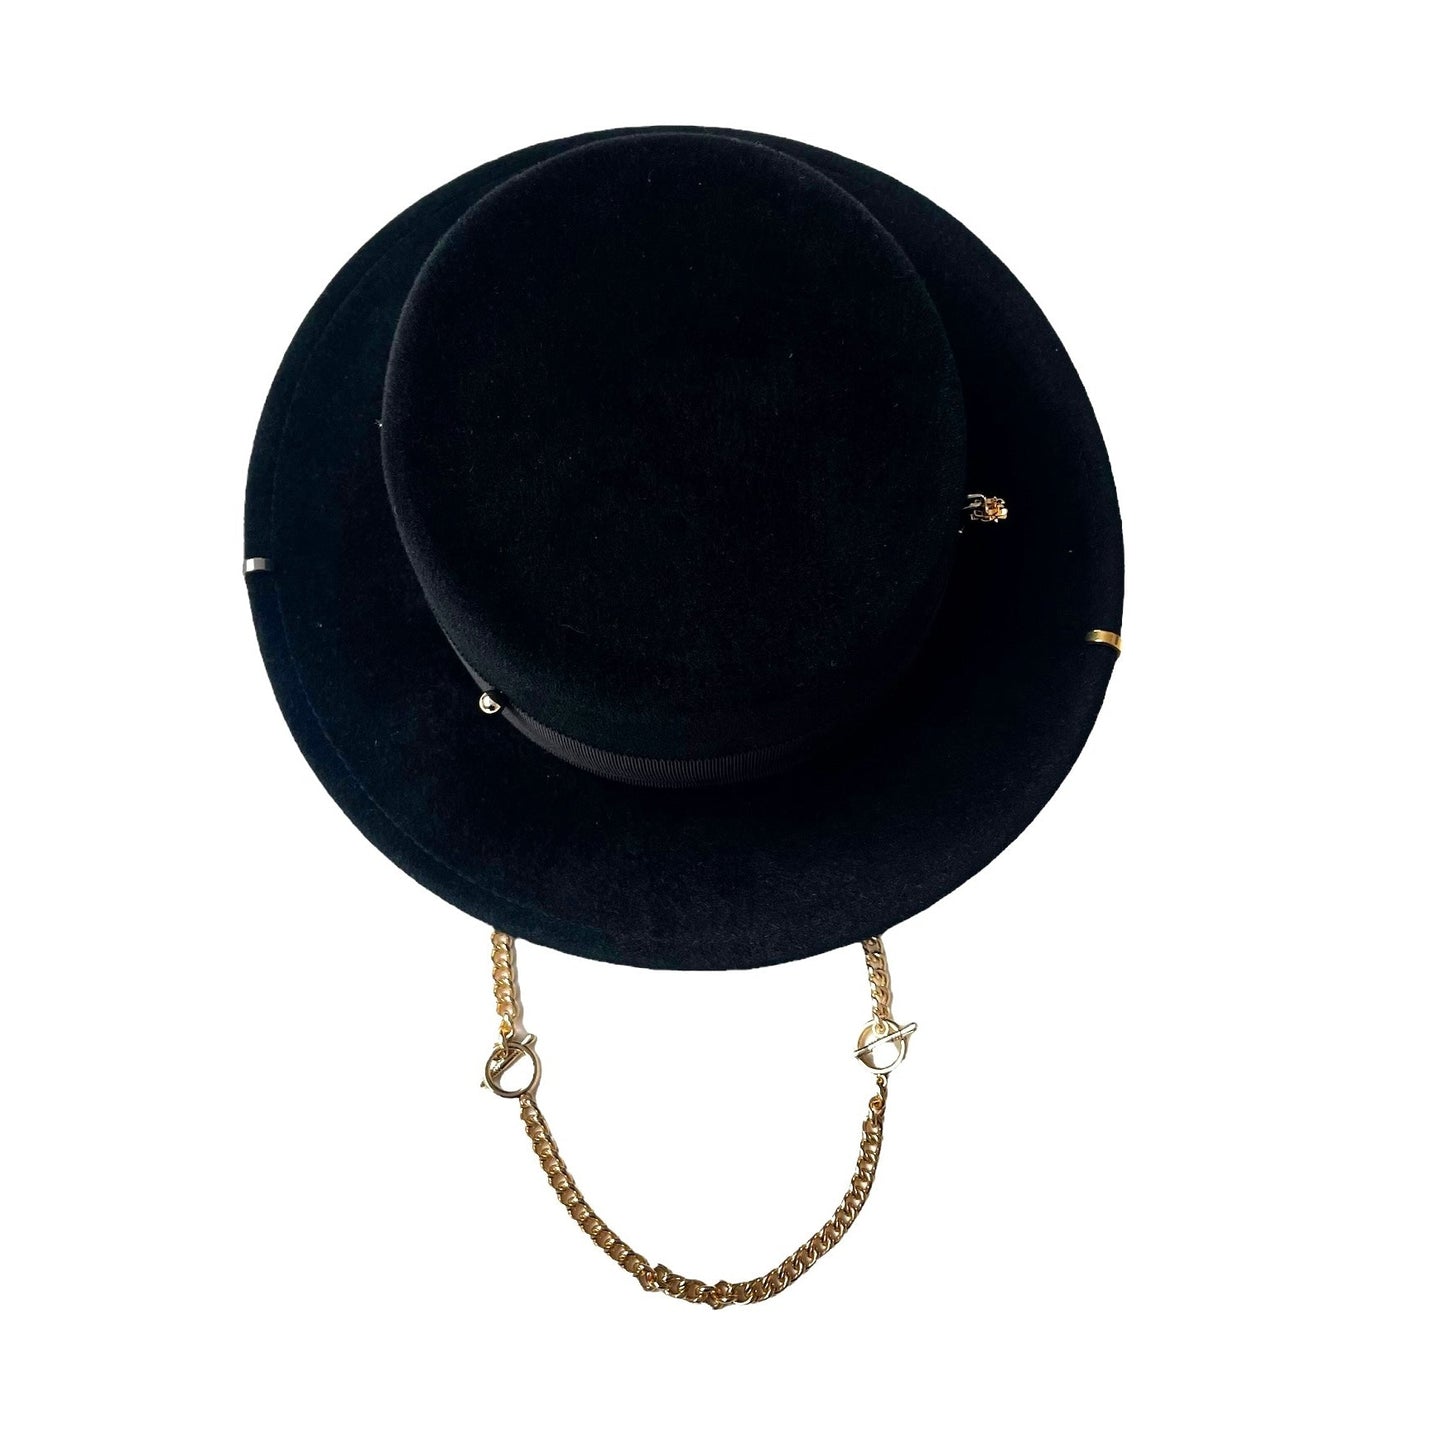 Black Felt Hat - S